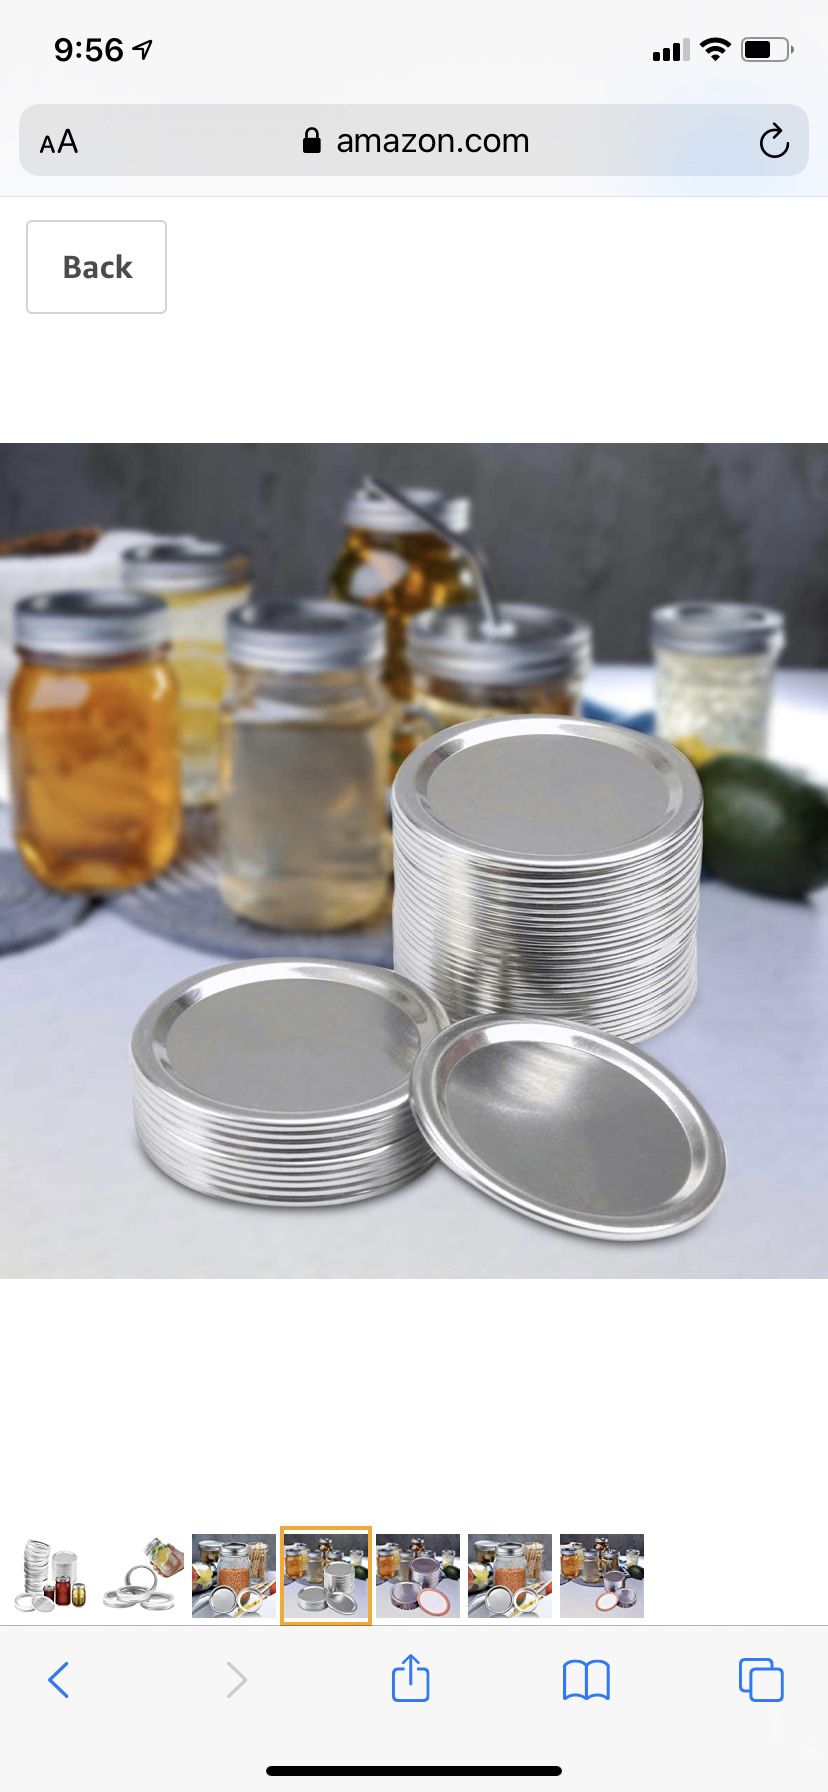 12 Pack Canning Jar Lids, Reusable Lids Leak Proof Secure Mason Storage Caps, Stainless Steel Regular Canning Jar Lid & Regular Mouth Mason Jar Bands